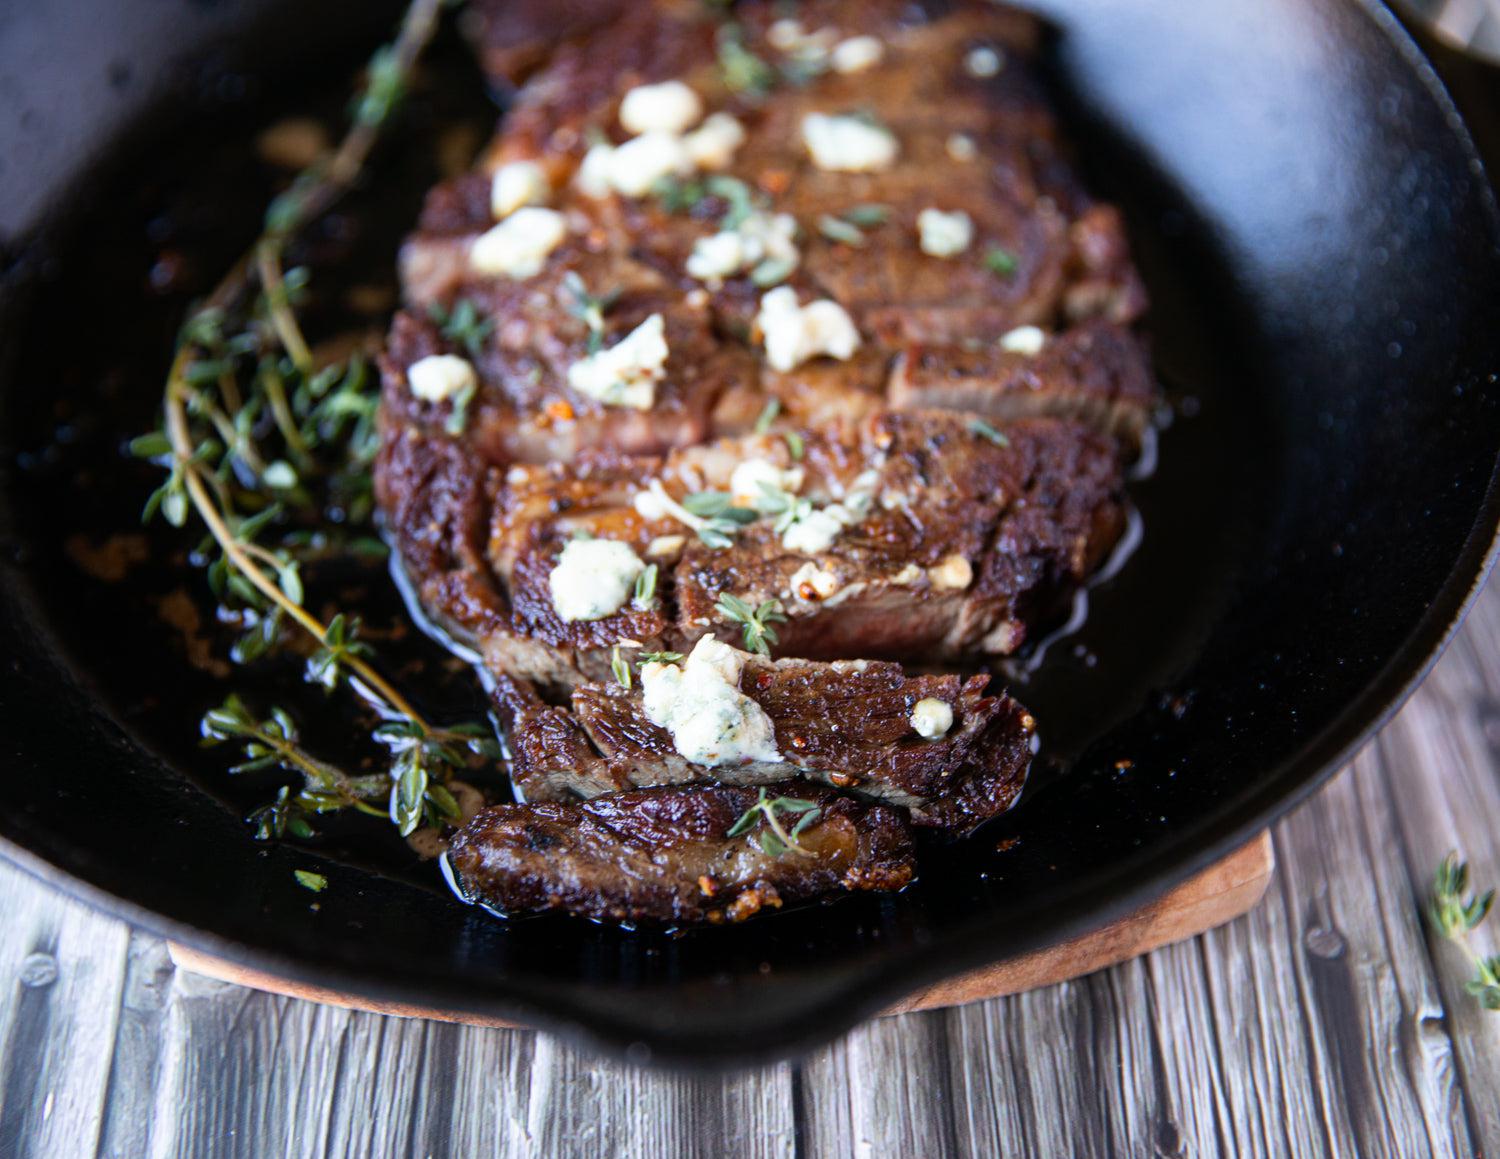 12 Oz - Wagyu Rib Eye Grilling Steak